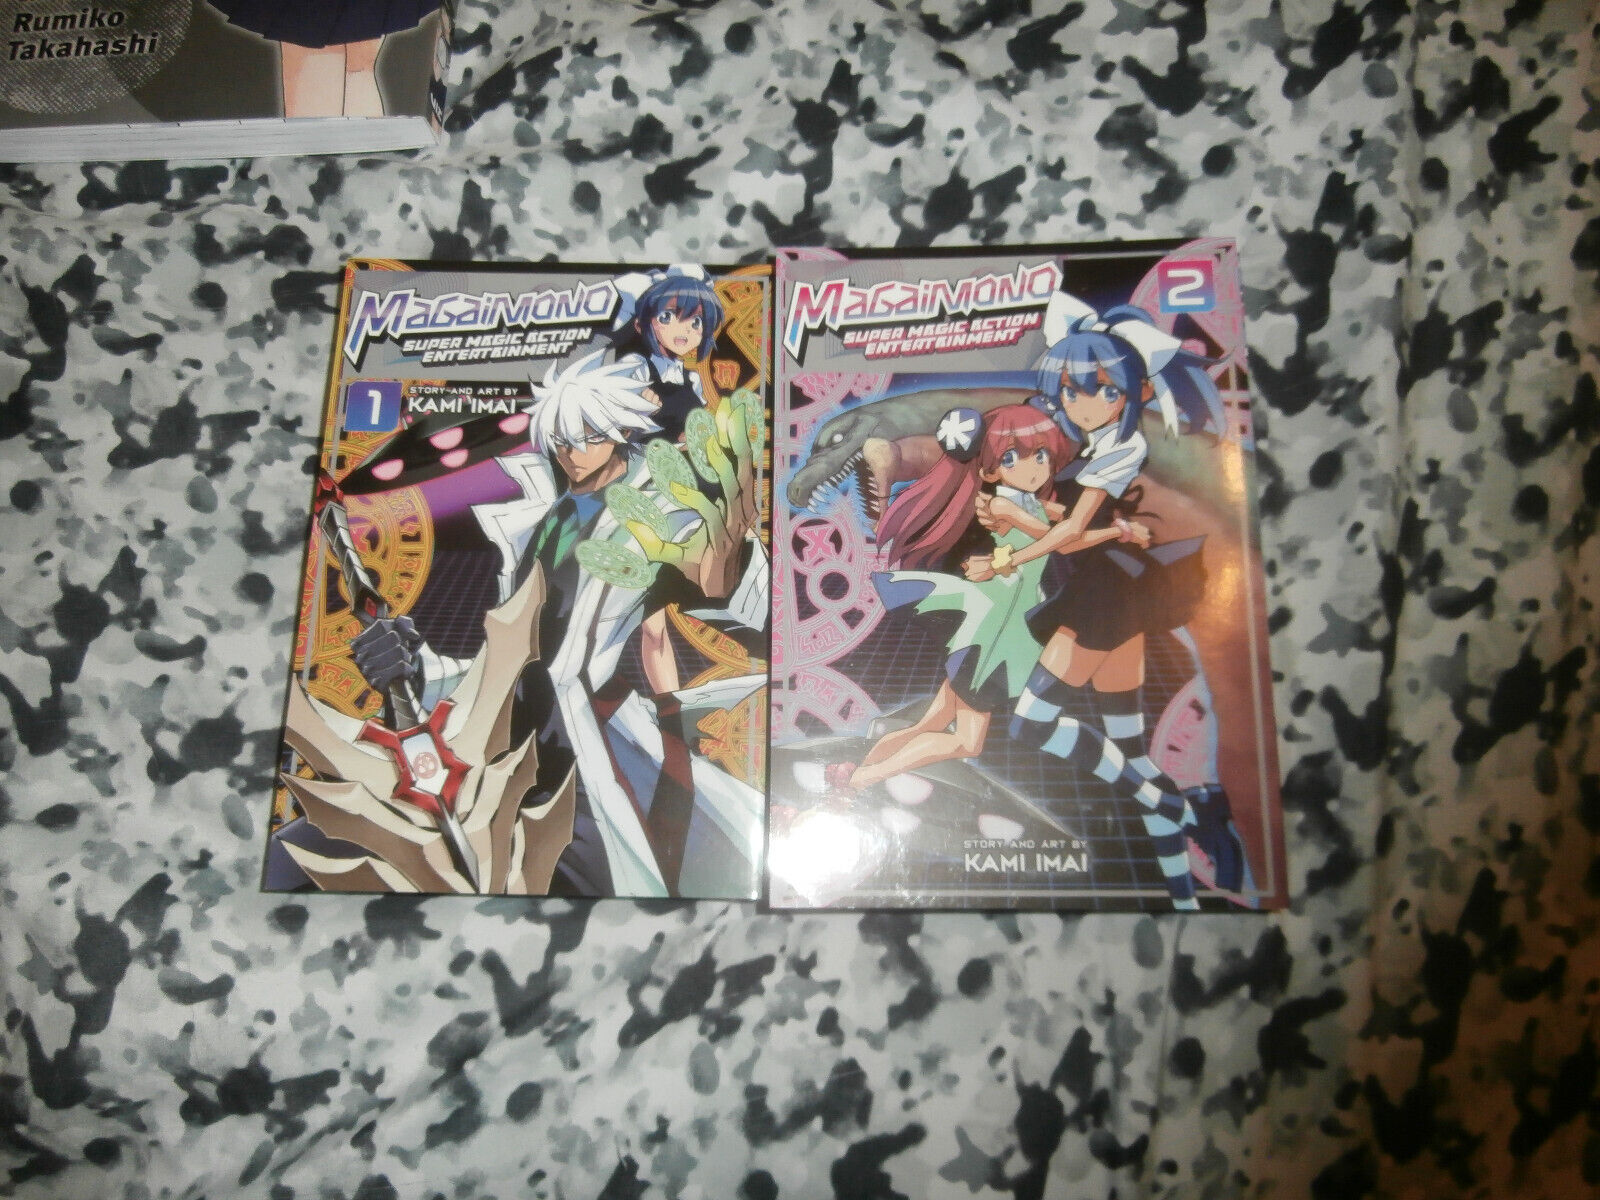 Magaimono Super Magic Action Entertainment Manga Lot Volumes 1-2 Kami Imai